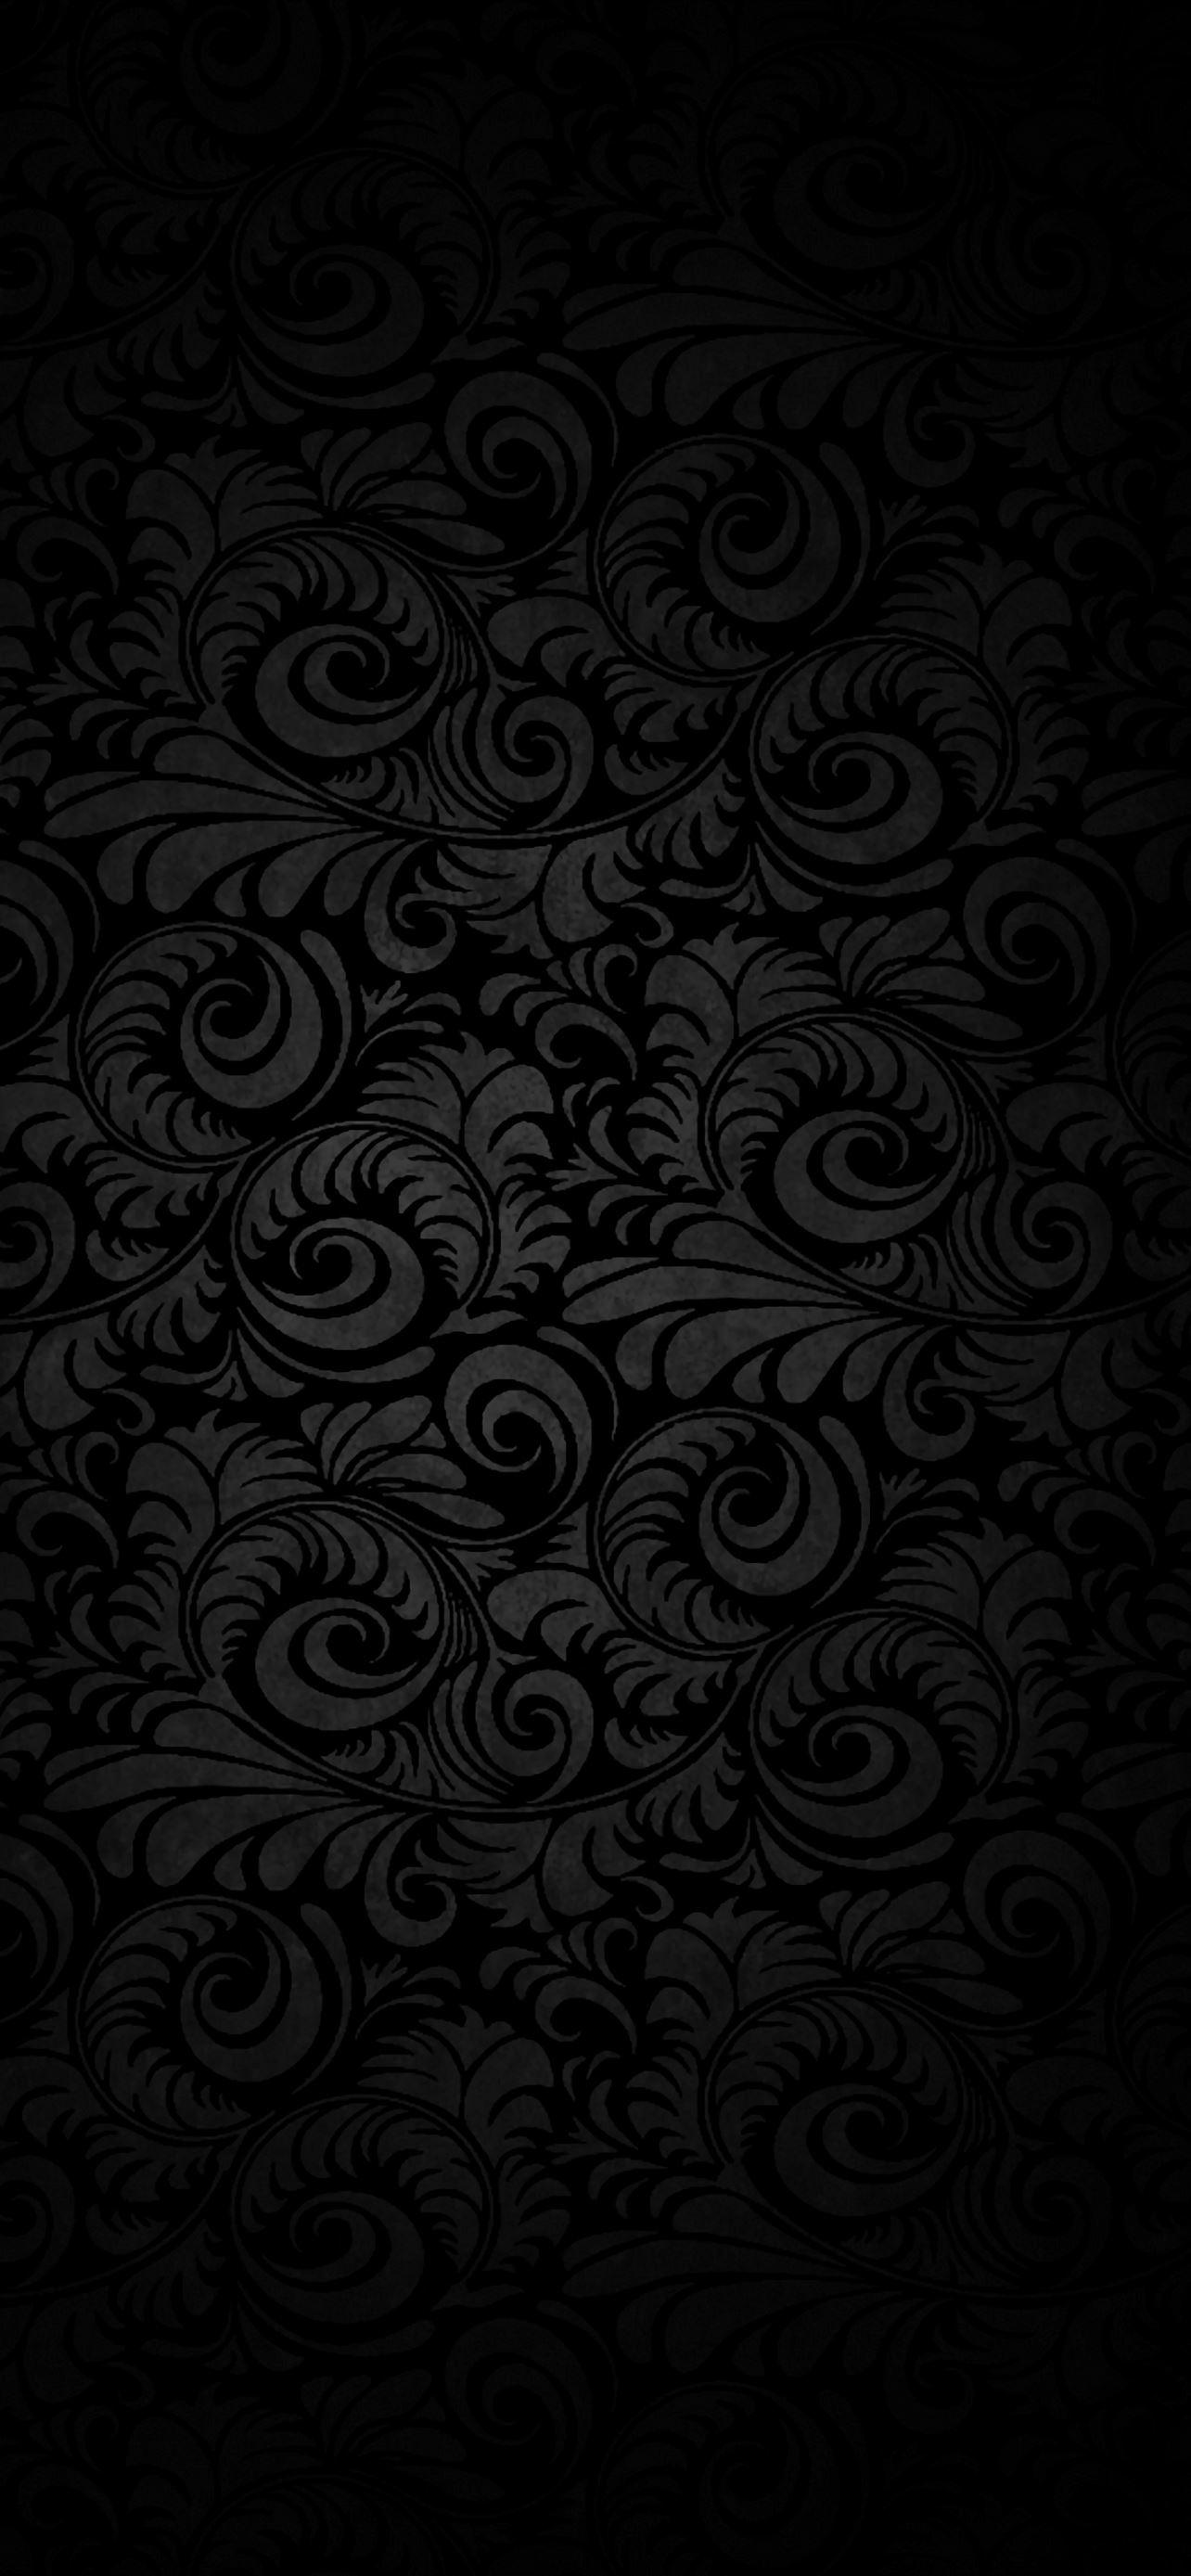 Dark Patterned Background iPhone Wallpaper